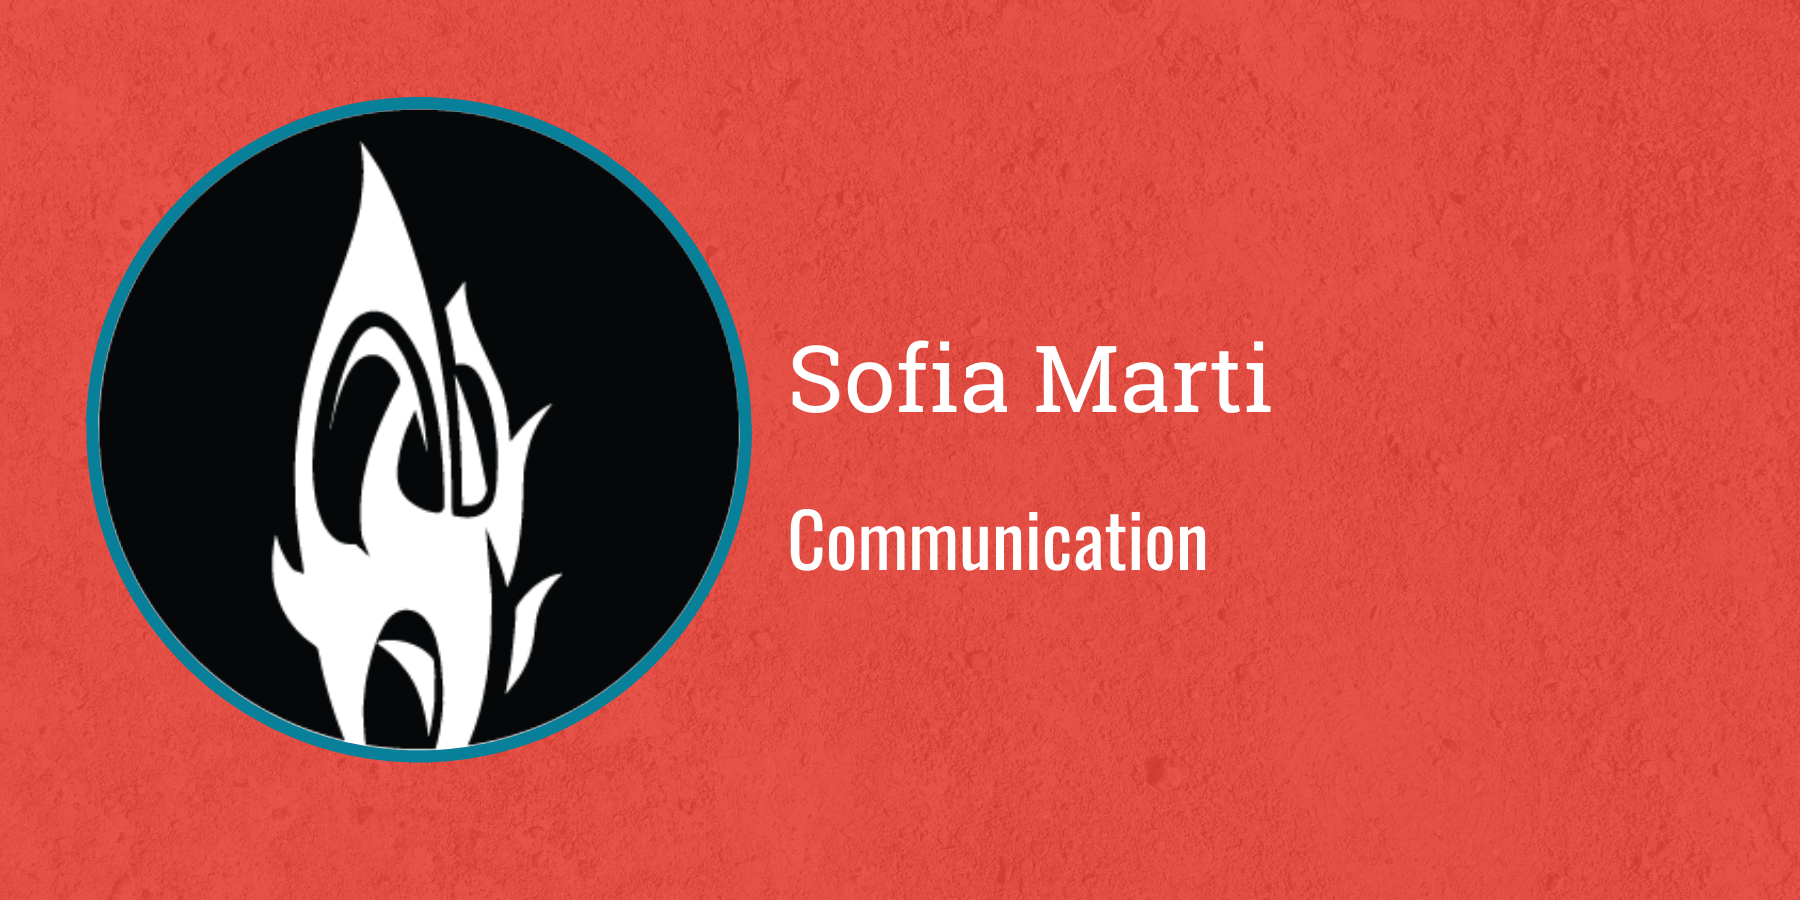 Sofia Marti
Communication
